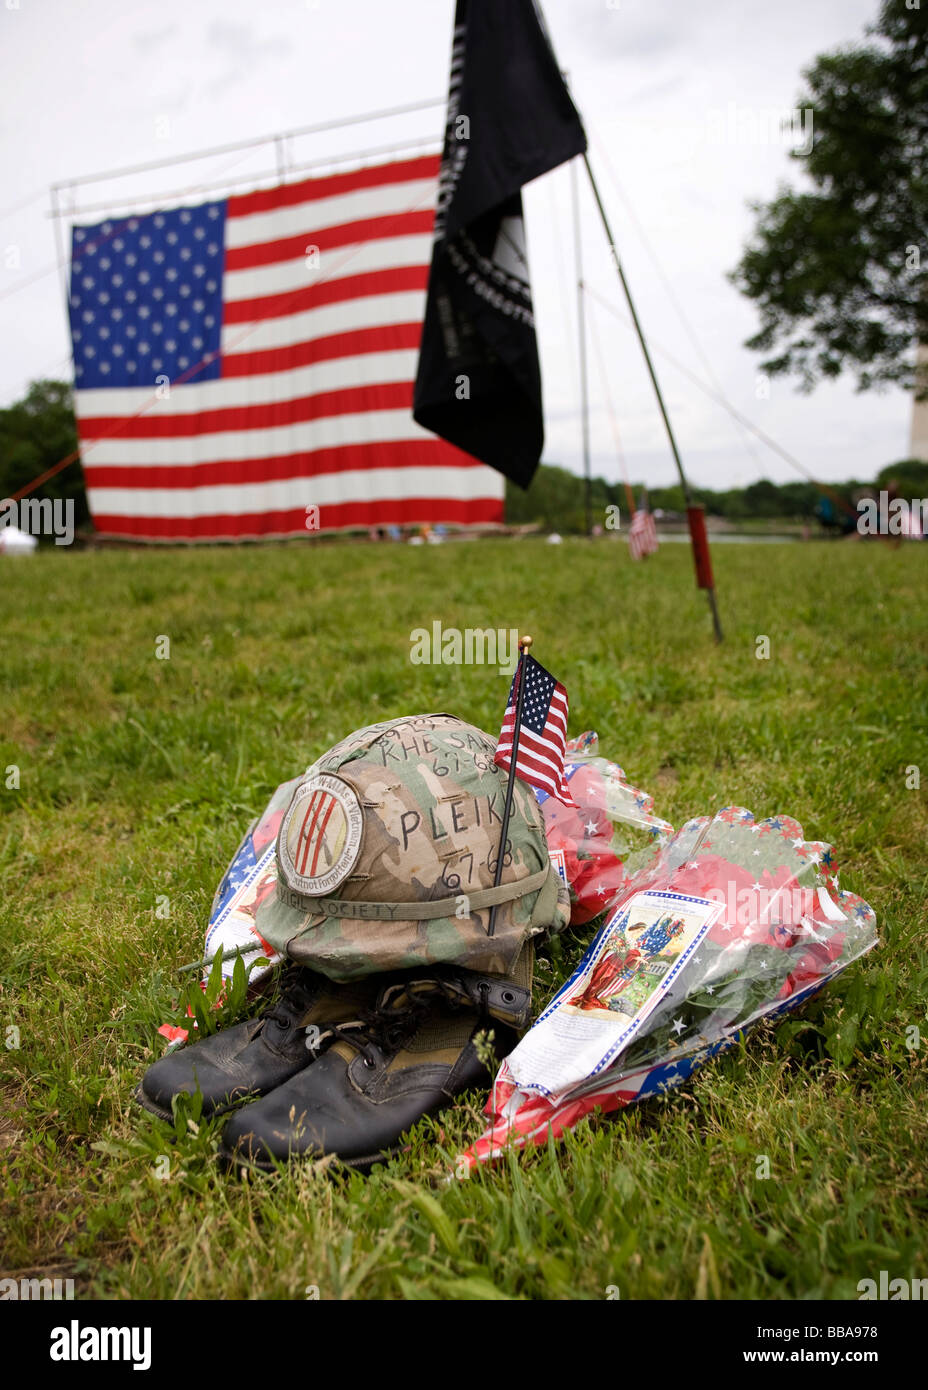 Makeshift memorial for fallen veterans of war - Washington, DC USA Stock Photo